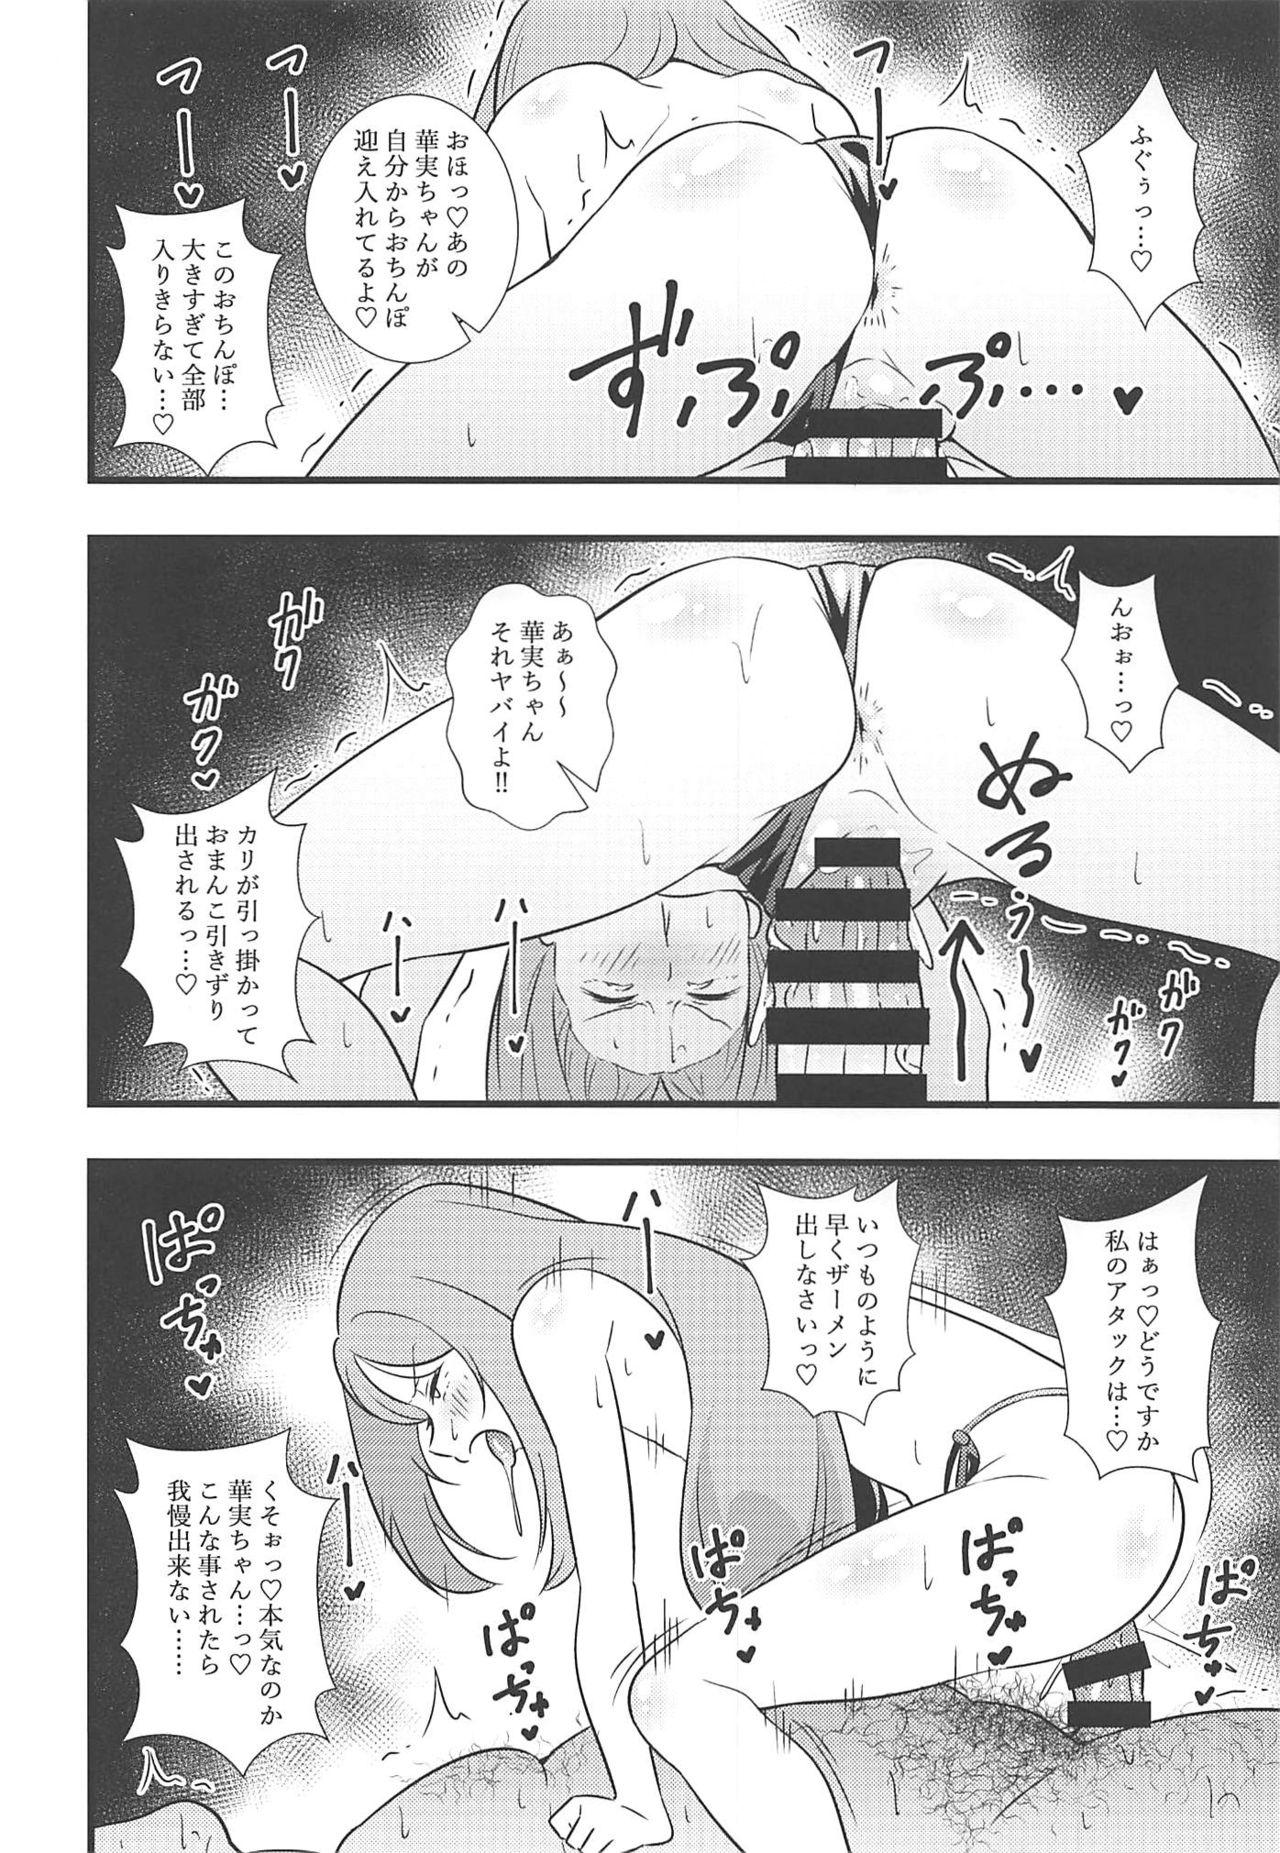 Japan Shouten! Harame Ore no Ragna Rock!! Risei ga Buttobu made Tanetsuke Rape - Battle spirits Finger - Page 11